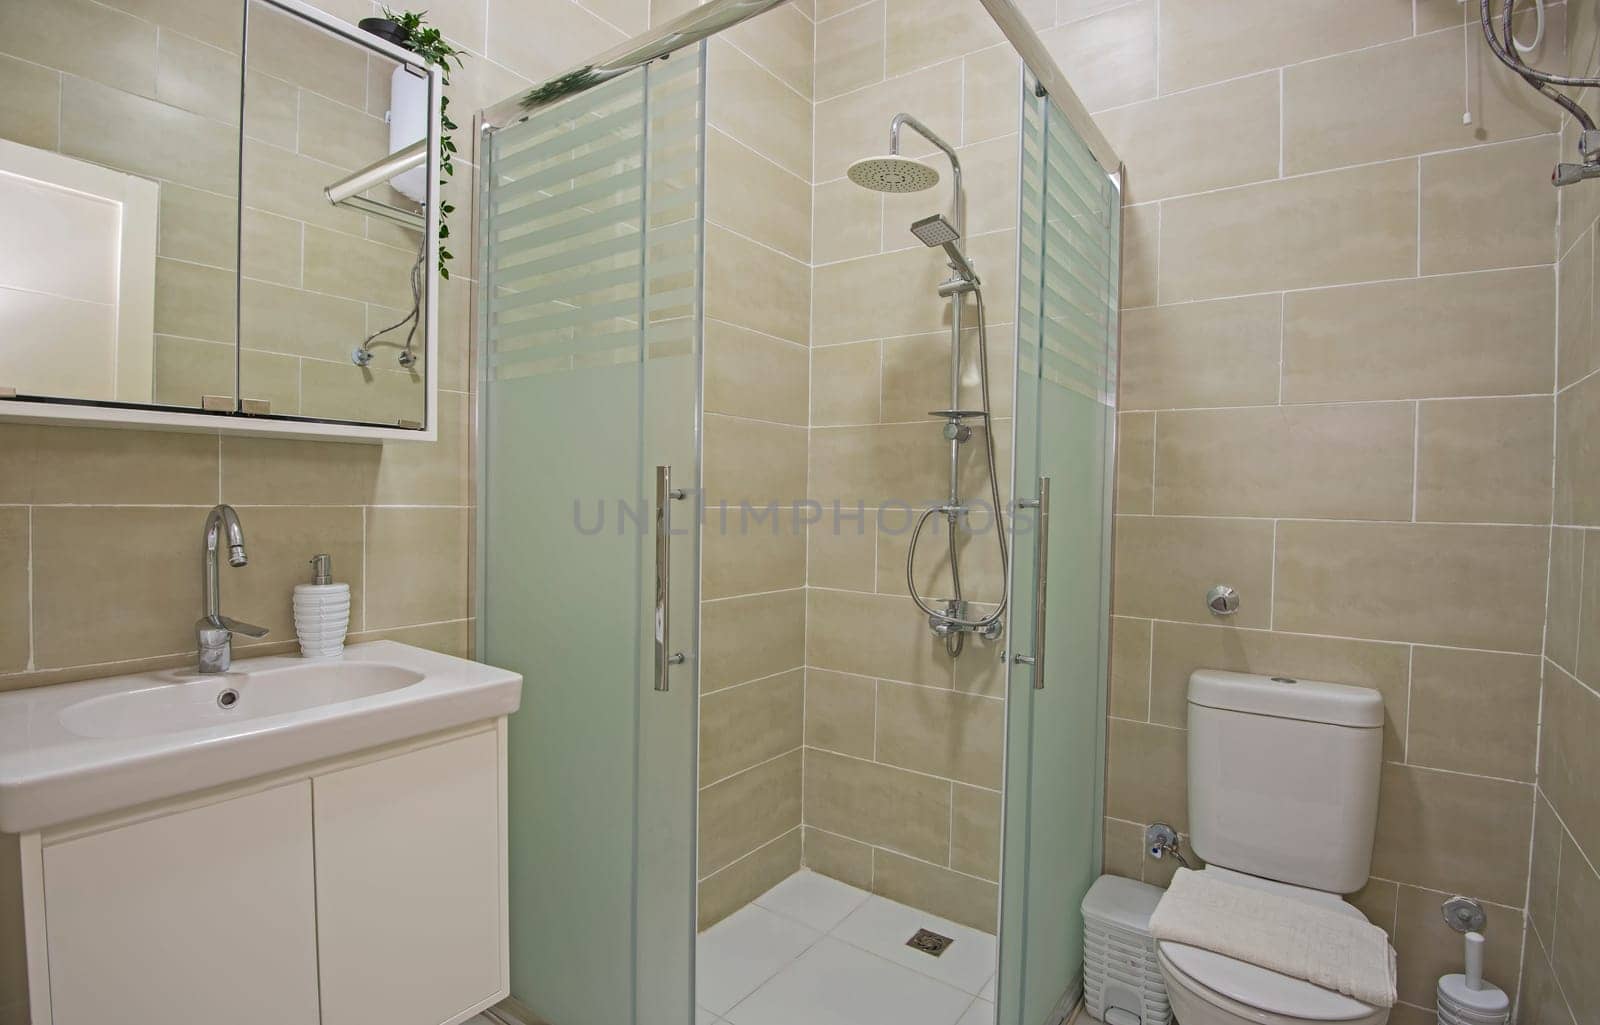 Interior design of bathroom in luxury apartment by paulvinten